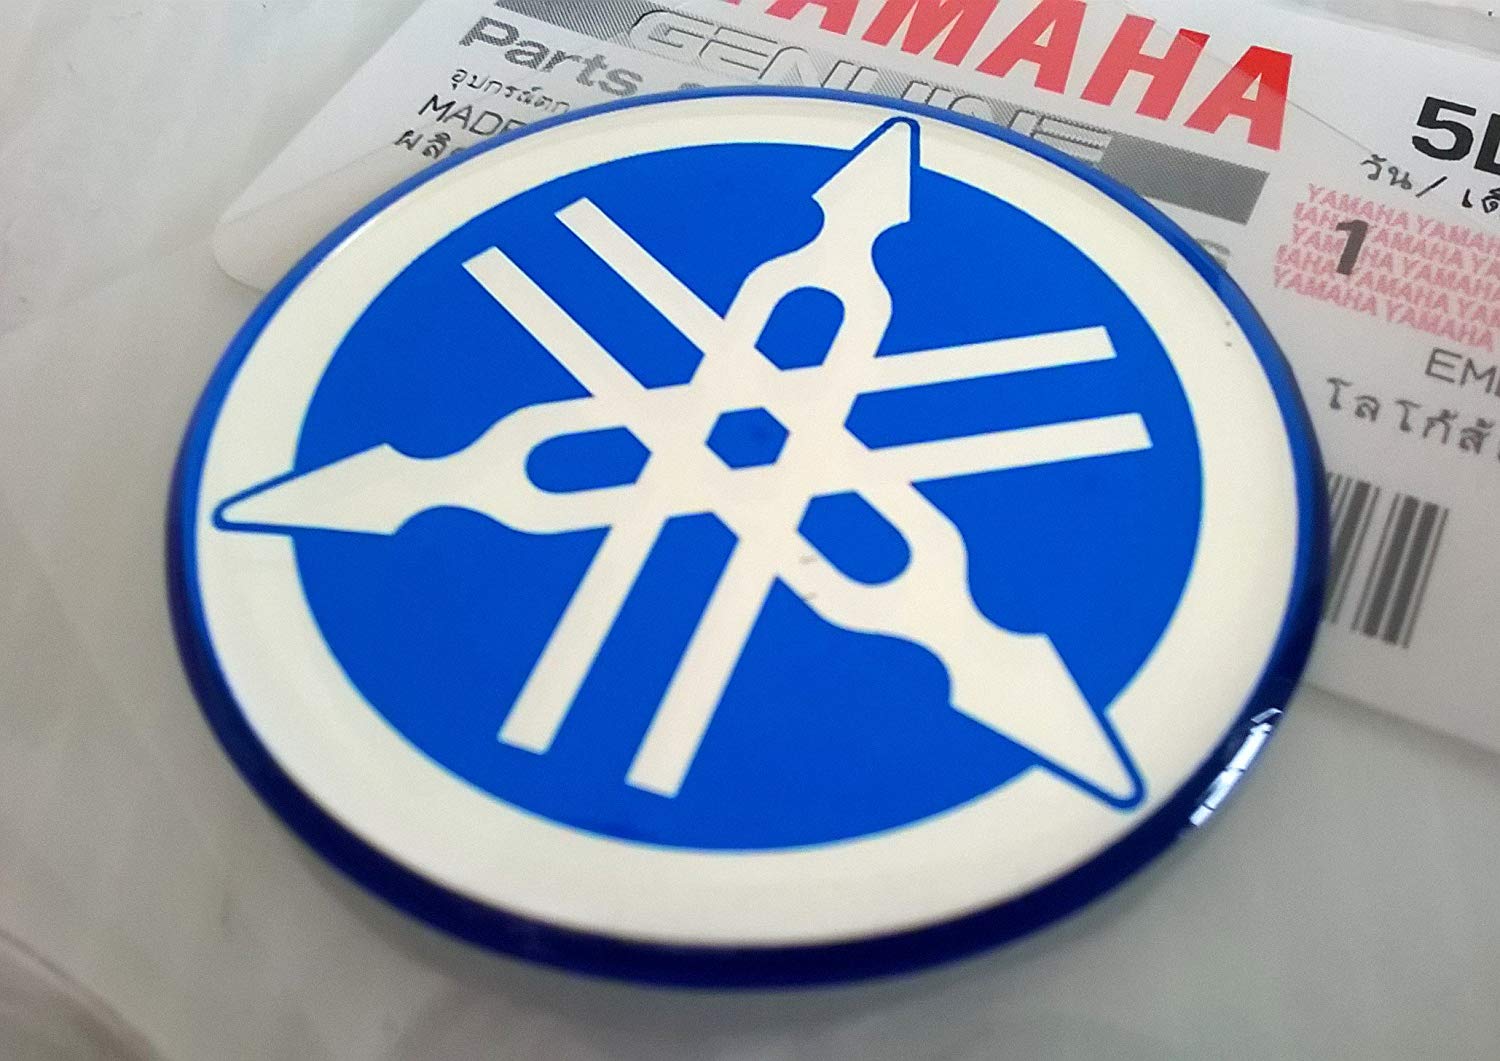 Yamaha Tuning Fork Logo - 100% GENUINE 40mm Diameter YAMAHA TUNING FORK Decal Sticker Emblem ...